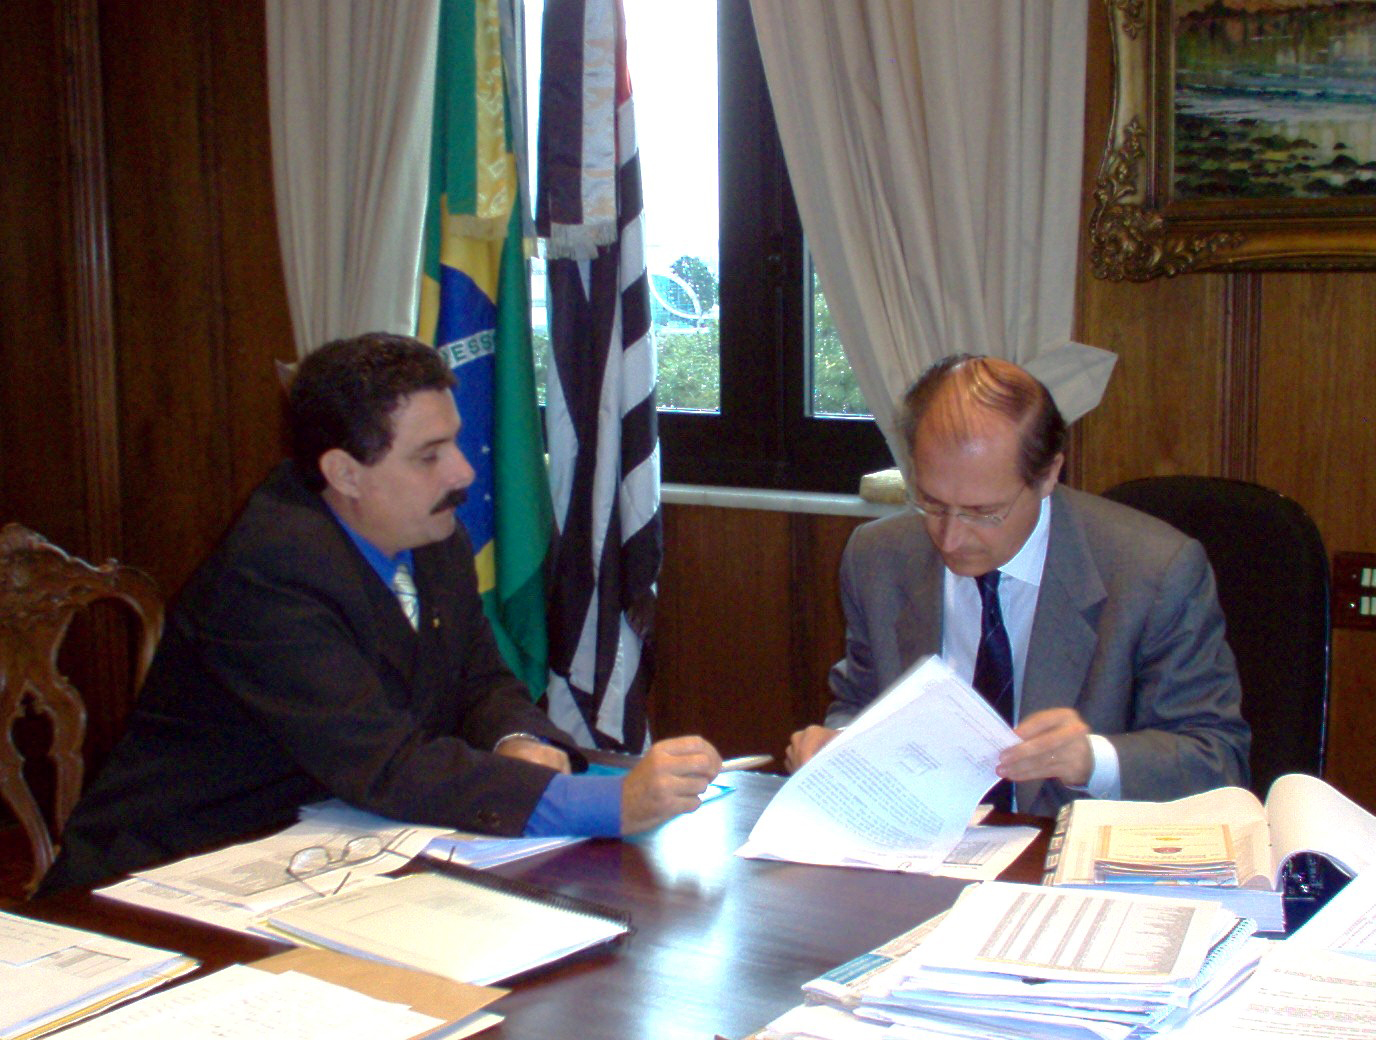 Deputado Paulo Srgio e governador Geraldo Alckmin<a style='float:right;color:#ccc' href='https://www3.al.sp.gov.br/repositorio/noticia/hist/PAULO SERGIO ALCK.jpg' target=_blank><i class='bi bi-zoom-in'></i> Clique para ver a imagem </a>